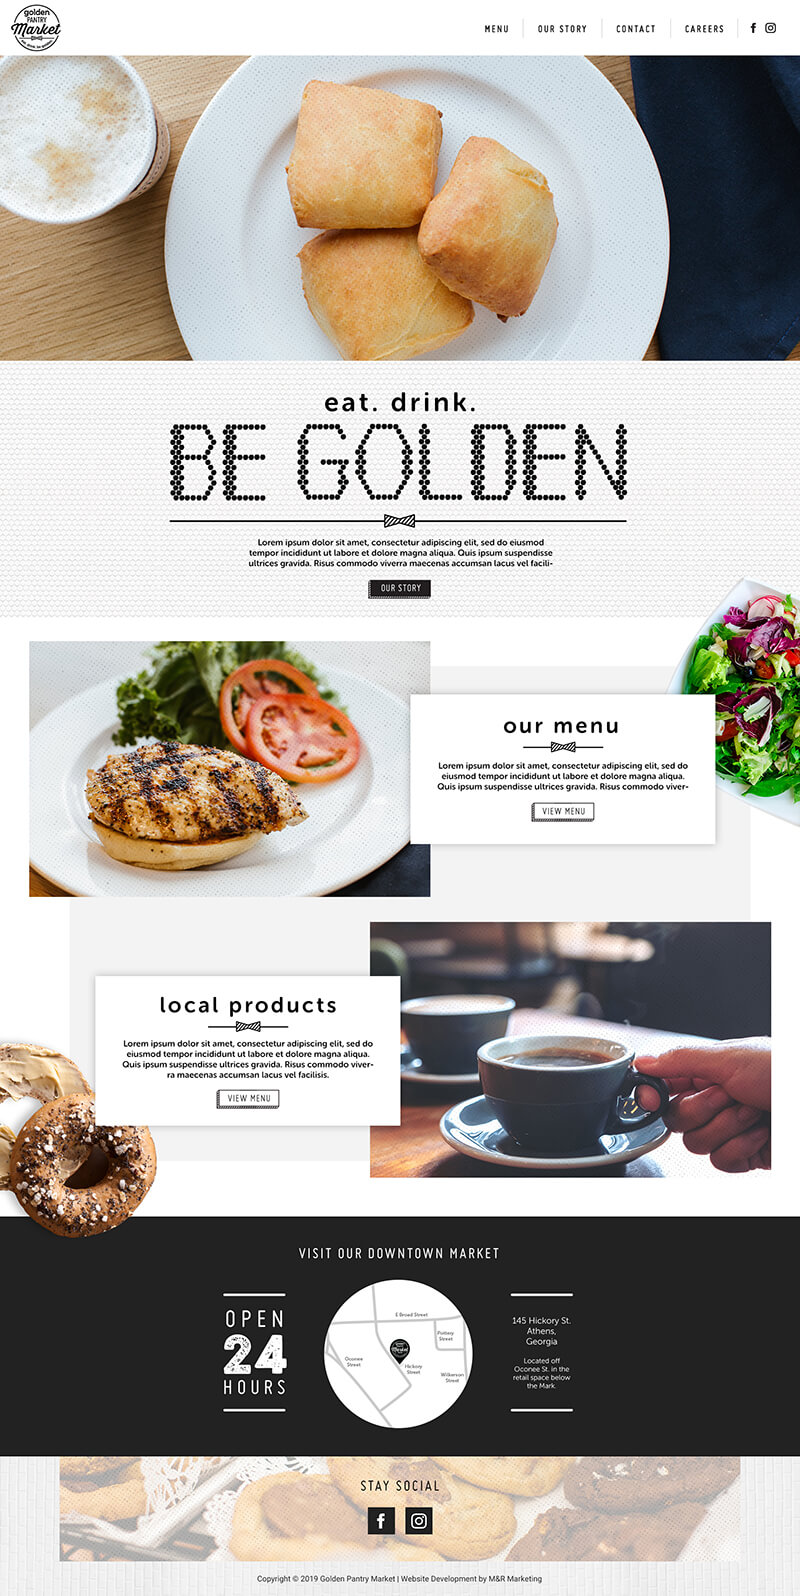 Golden Pantry Market website design